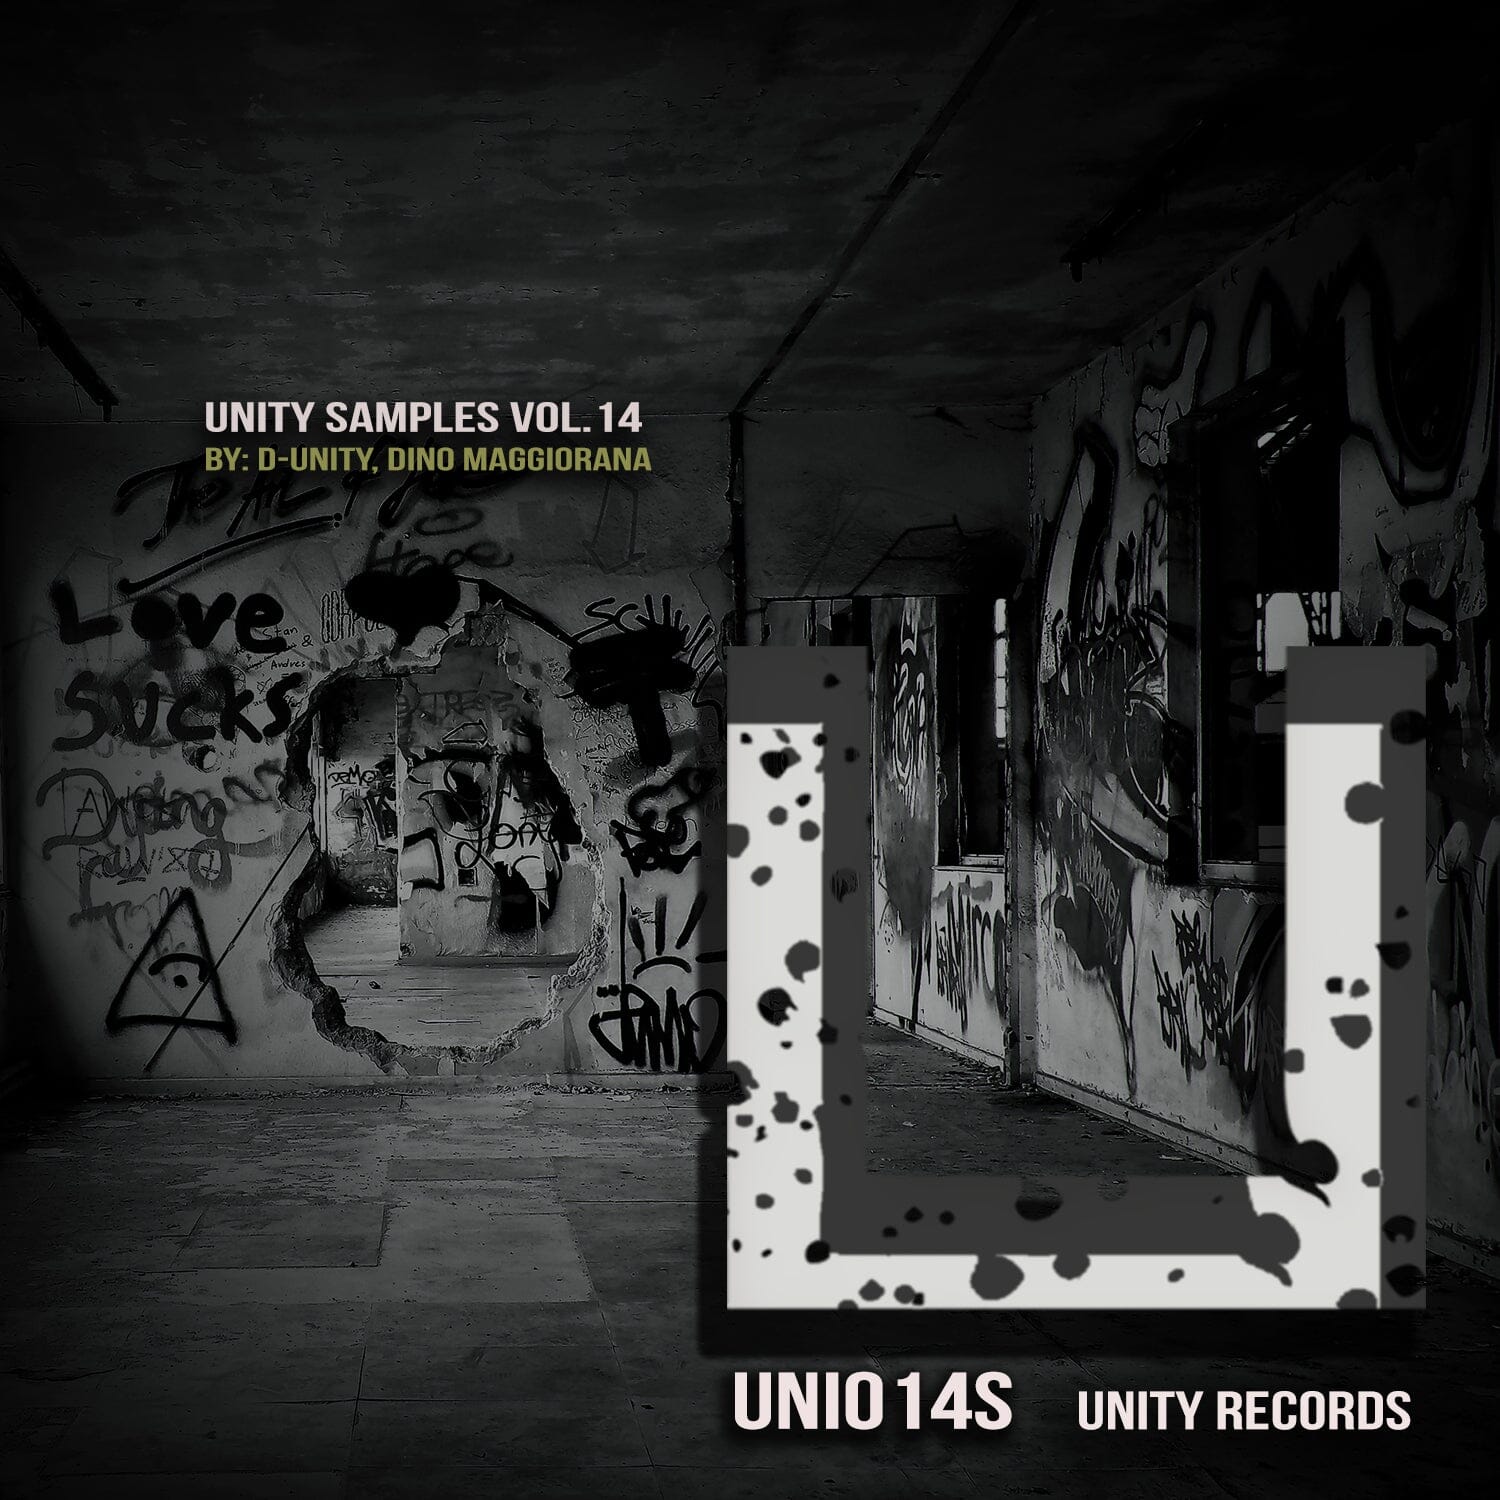 Unity Samples Vol.14 by D Unity, Dino Maggiorana Sample Pack Unity records